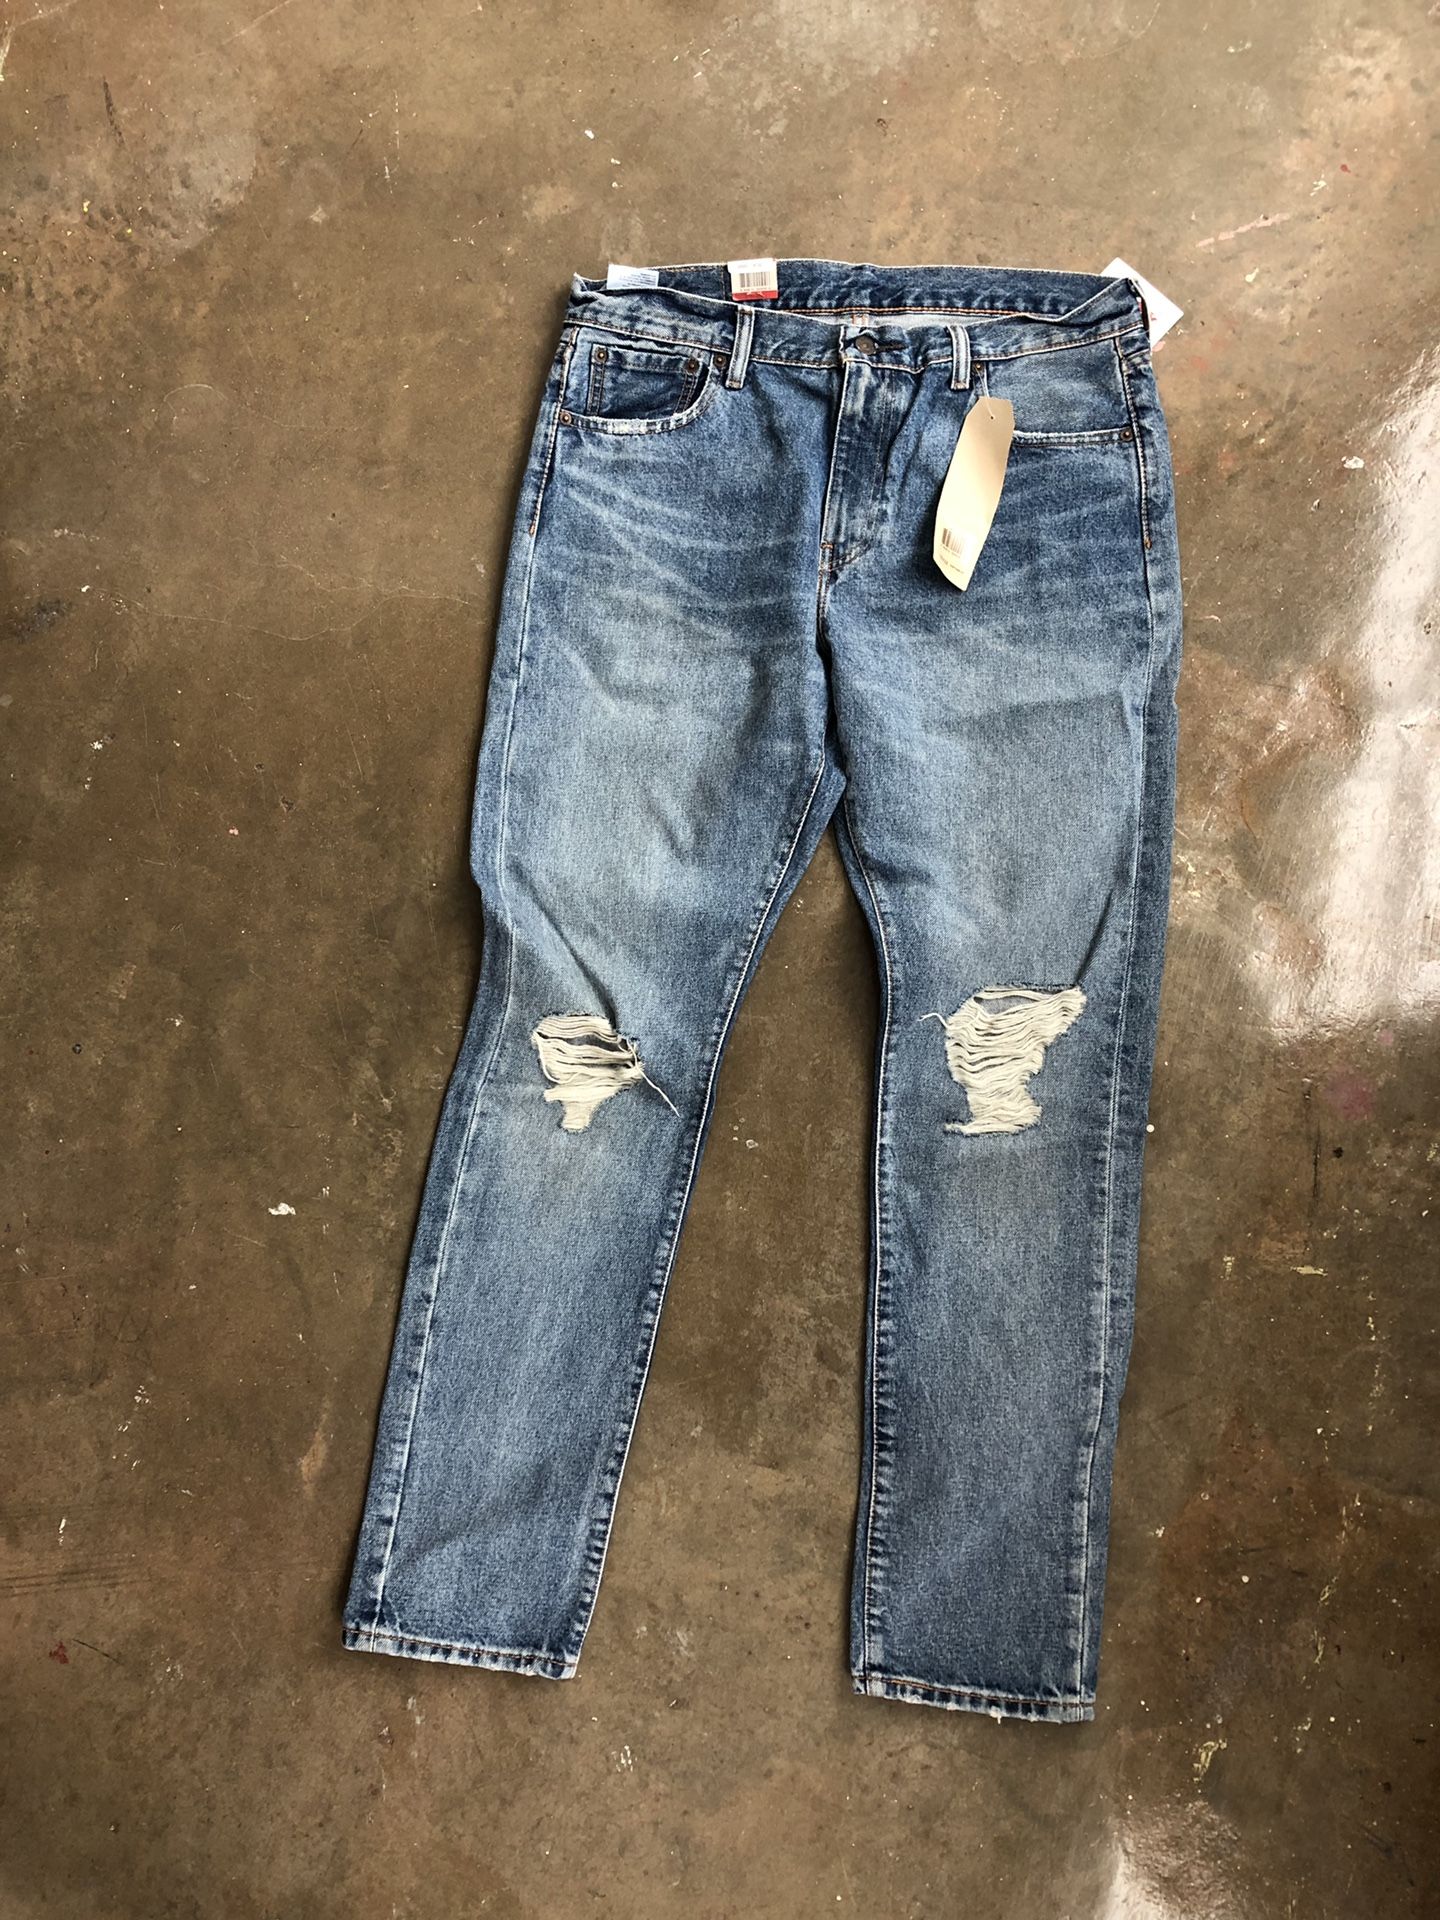 Levis 505 Slim straight leg jeans - 32x32 - Men’s